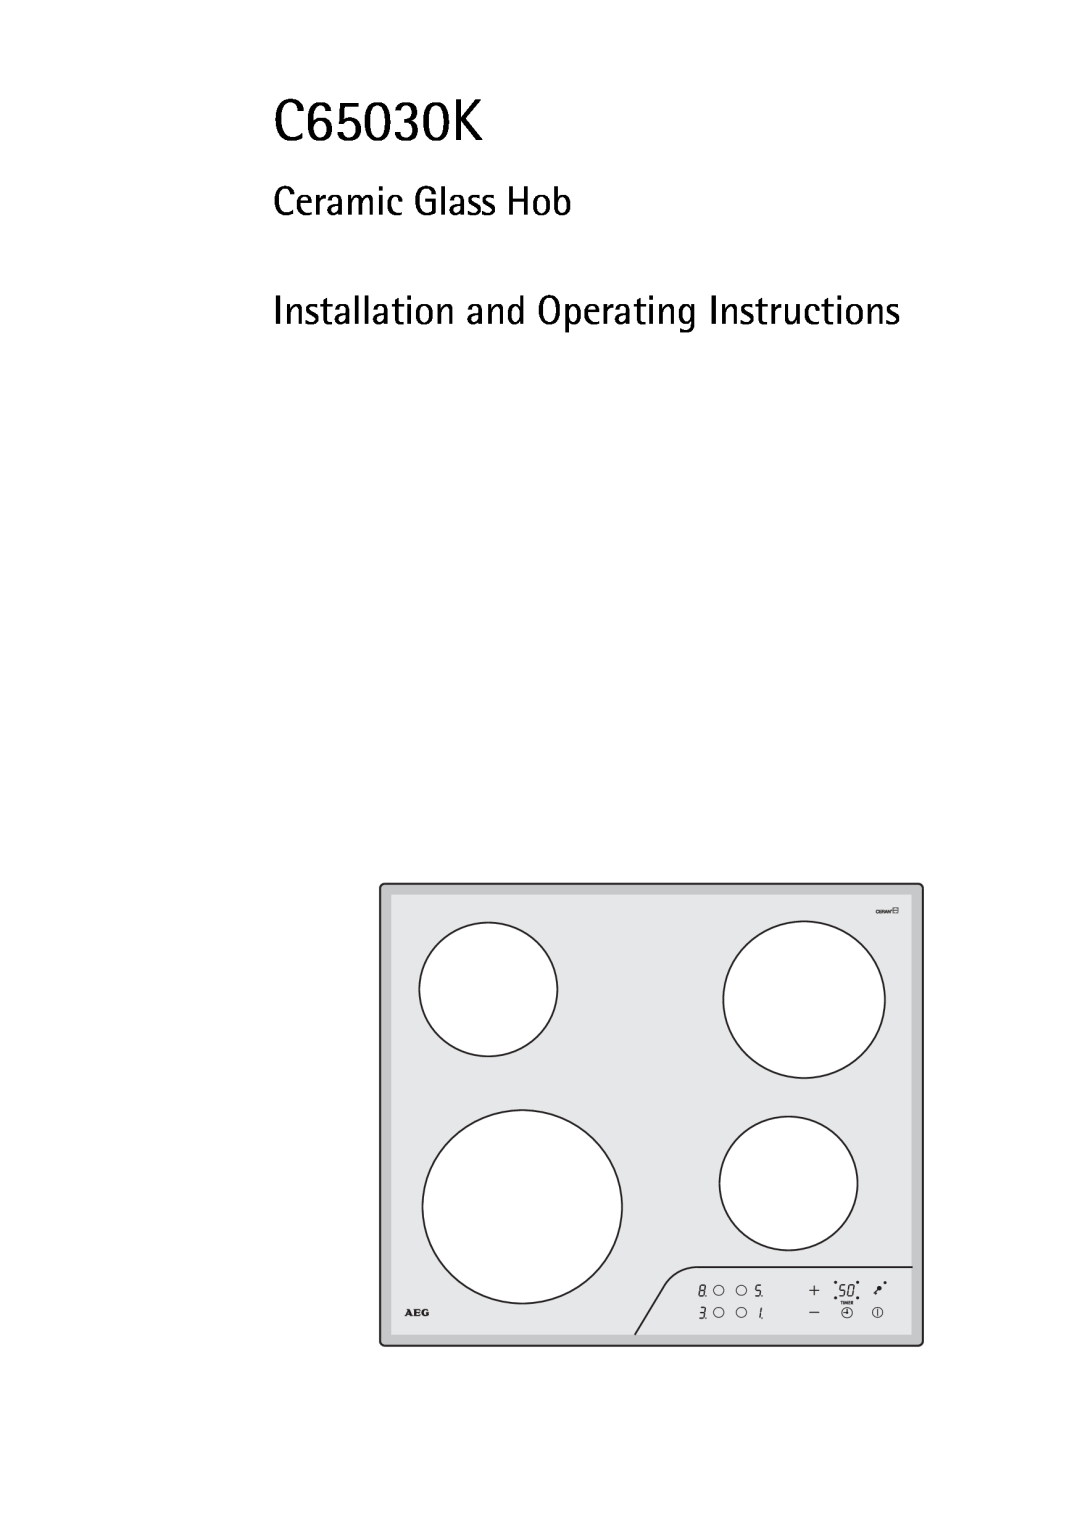 Electrolux C65030K operating instructions Ceramic Glass Hob, Installation and Operating Instructions 